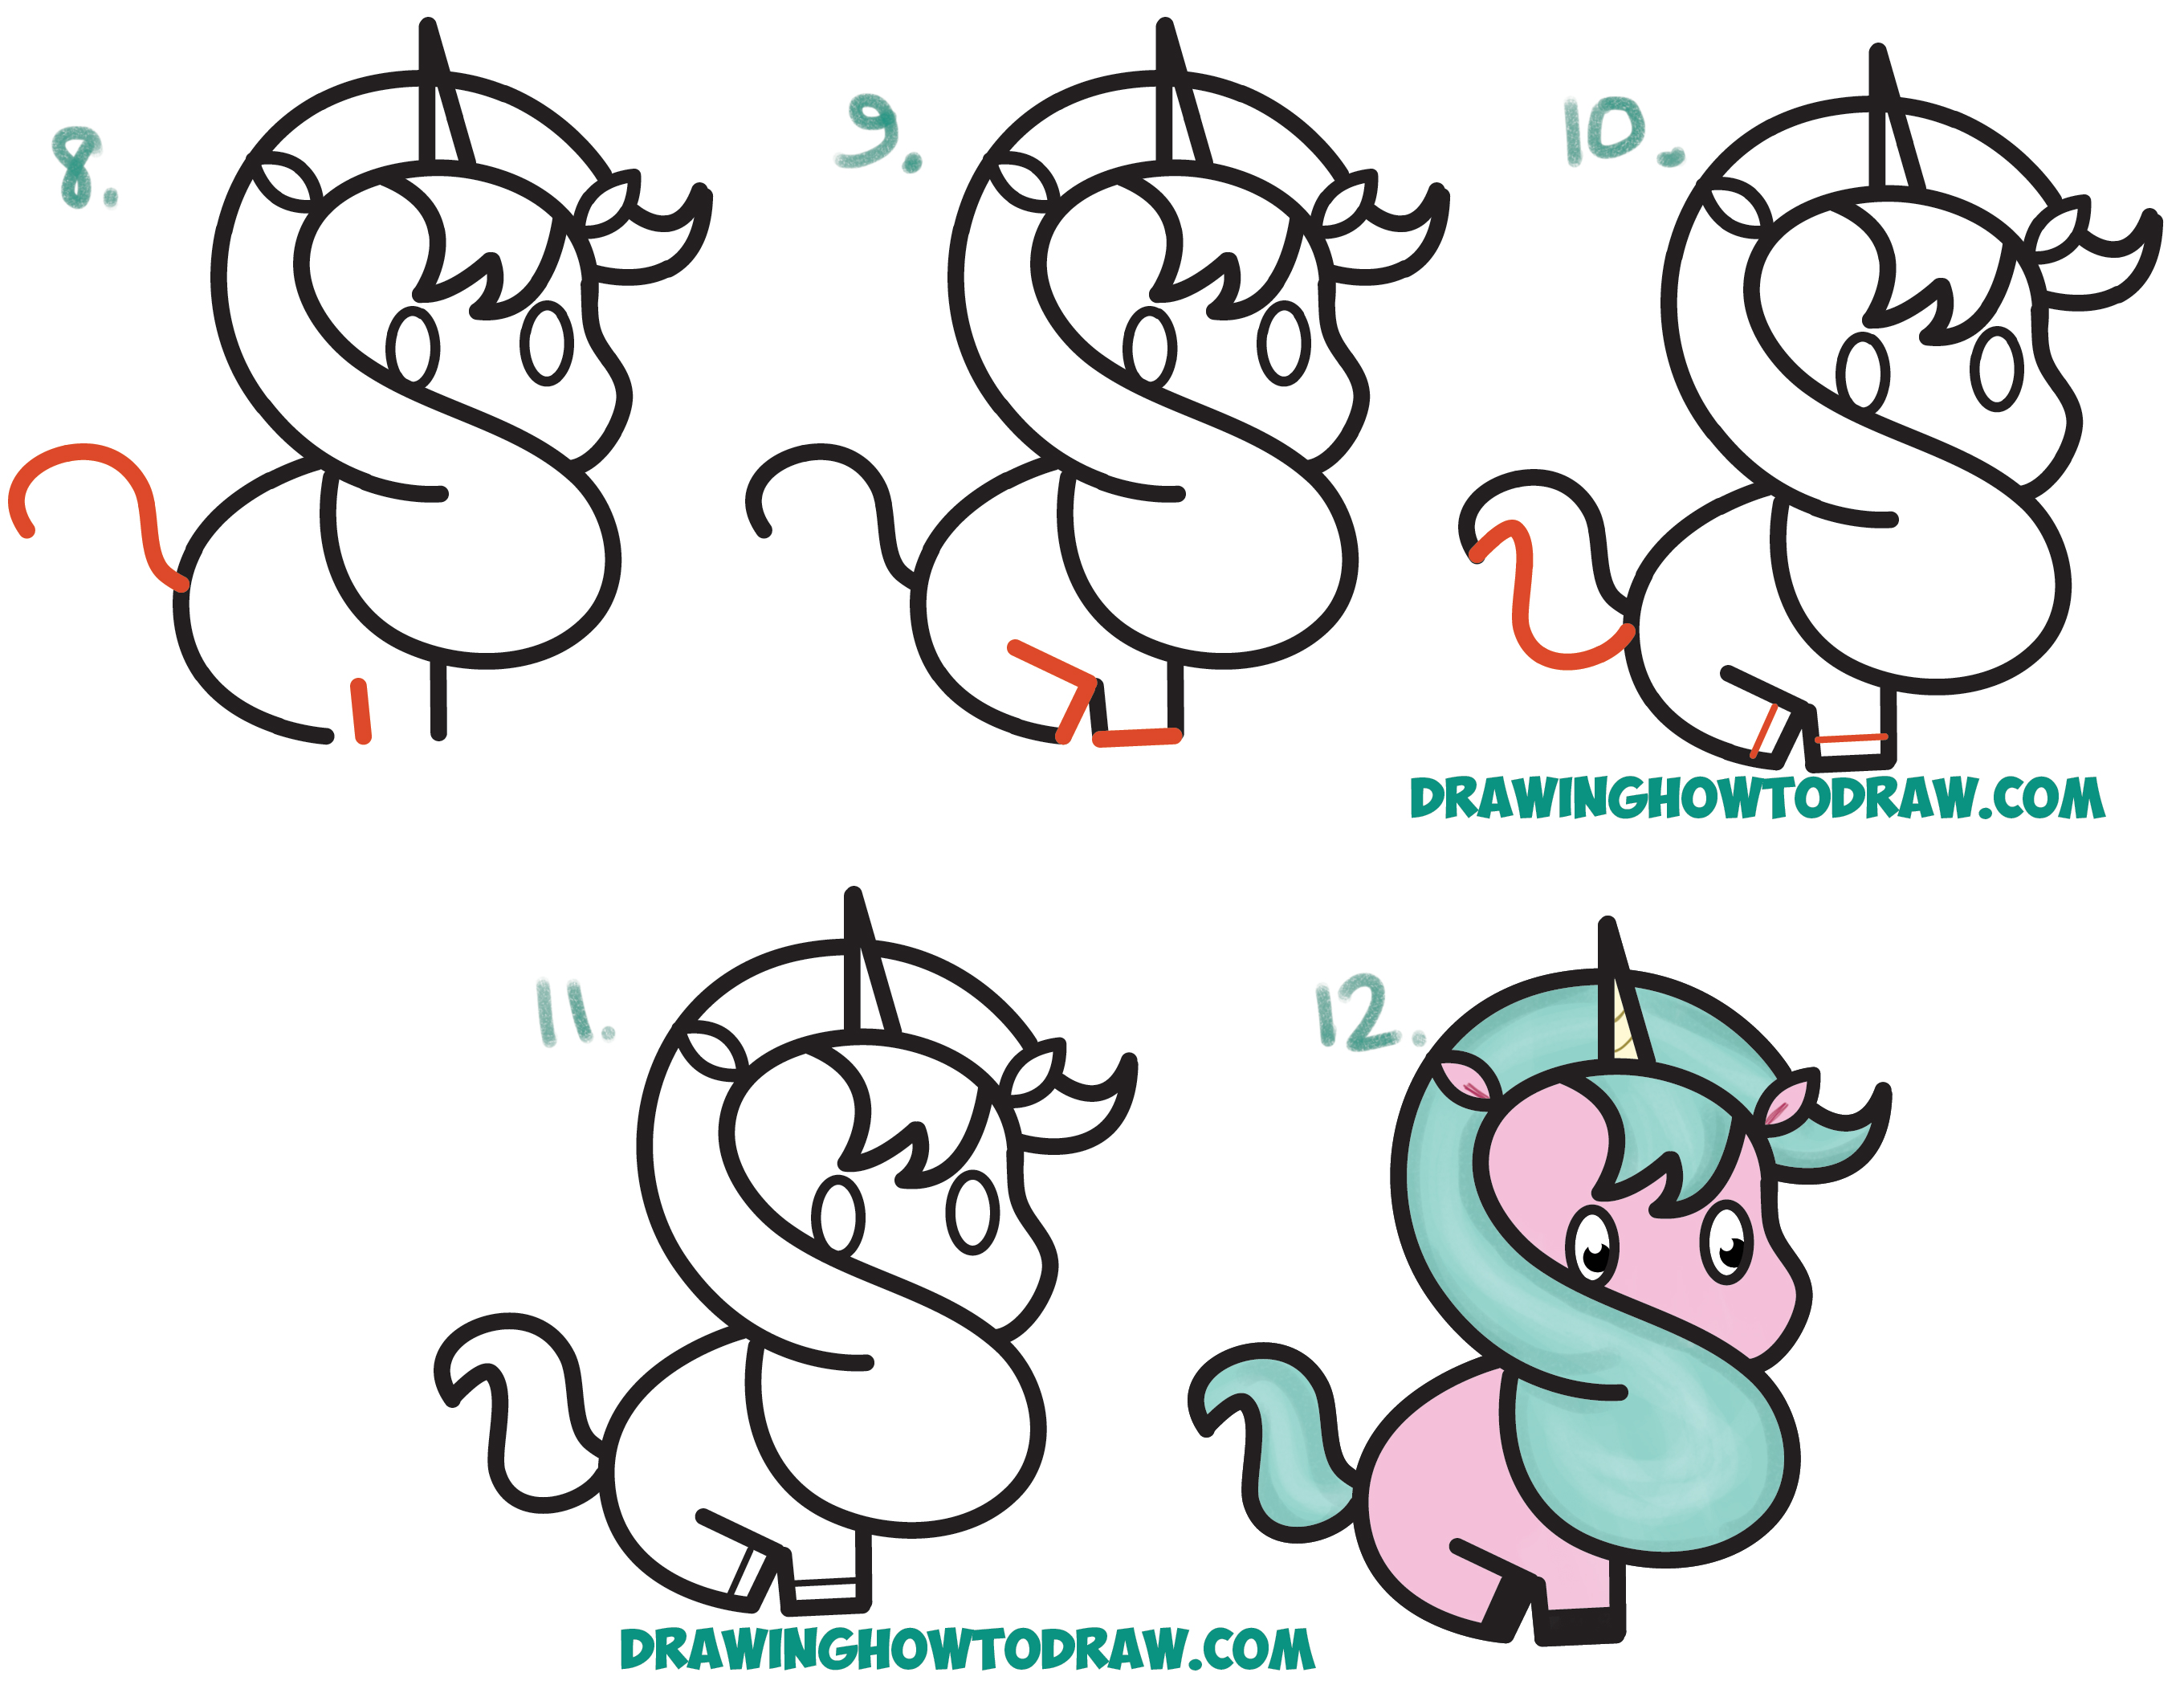 How to Draw a Cute Cartoon Unicorn (Kawaii) from a Dollar Sign Easy